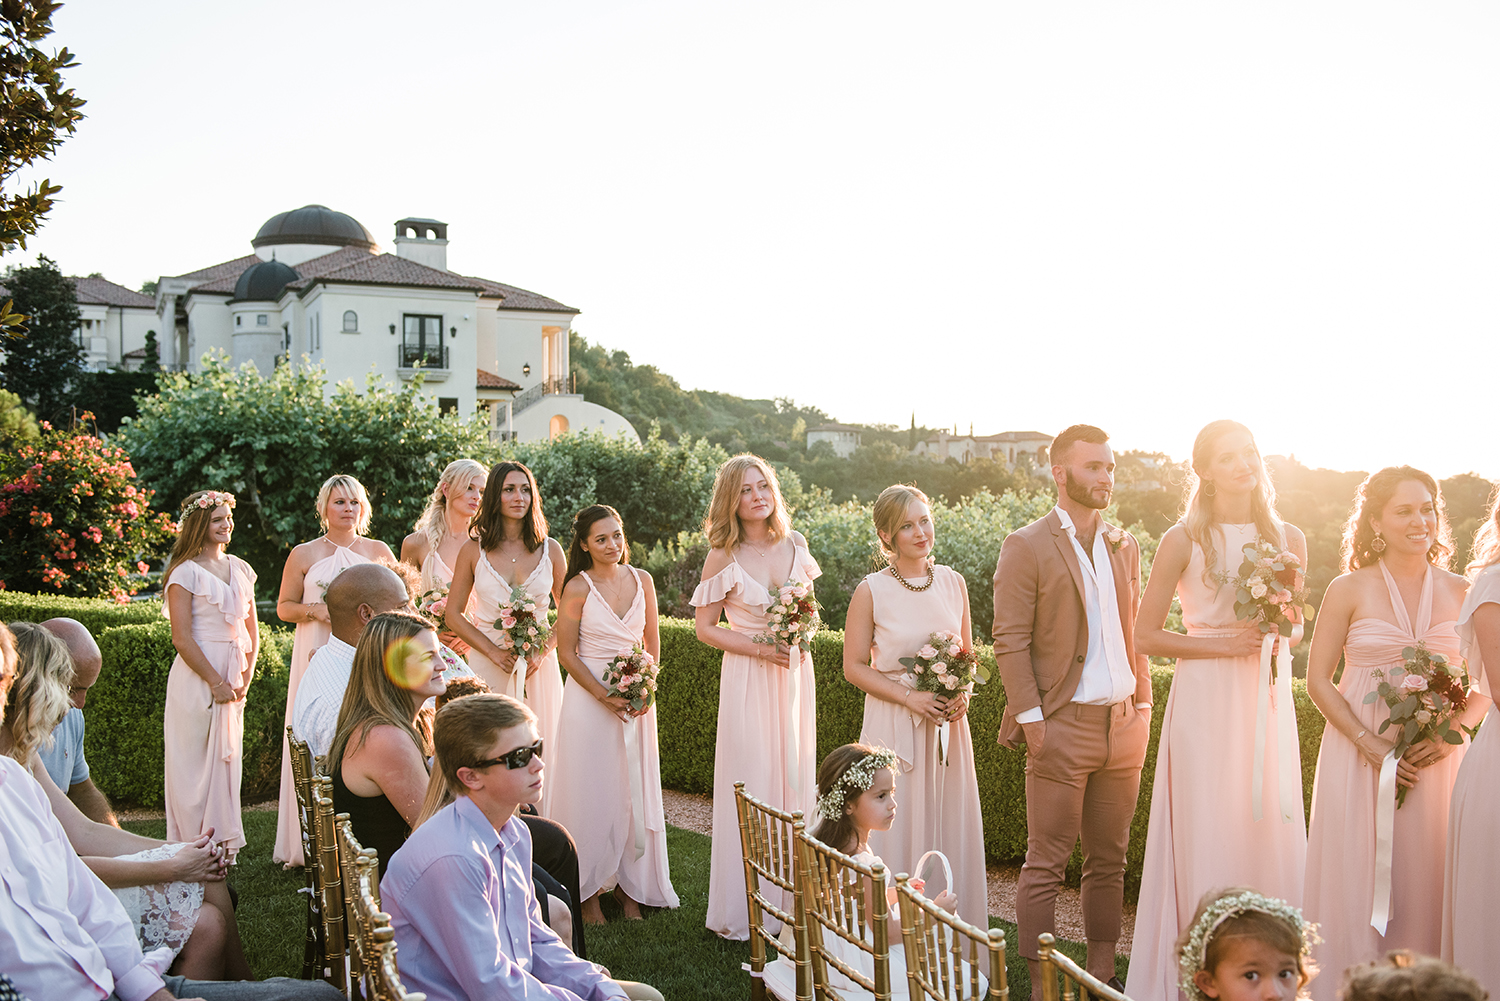 livvyland-blog-olivia-watson-wedding-villa-del-lago-austin-texas-fall-blush-burgundy-classic-romantic-bridal-party-blush-joanna-august-dresses